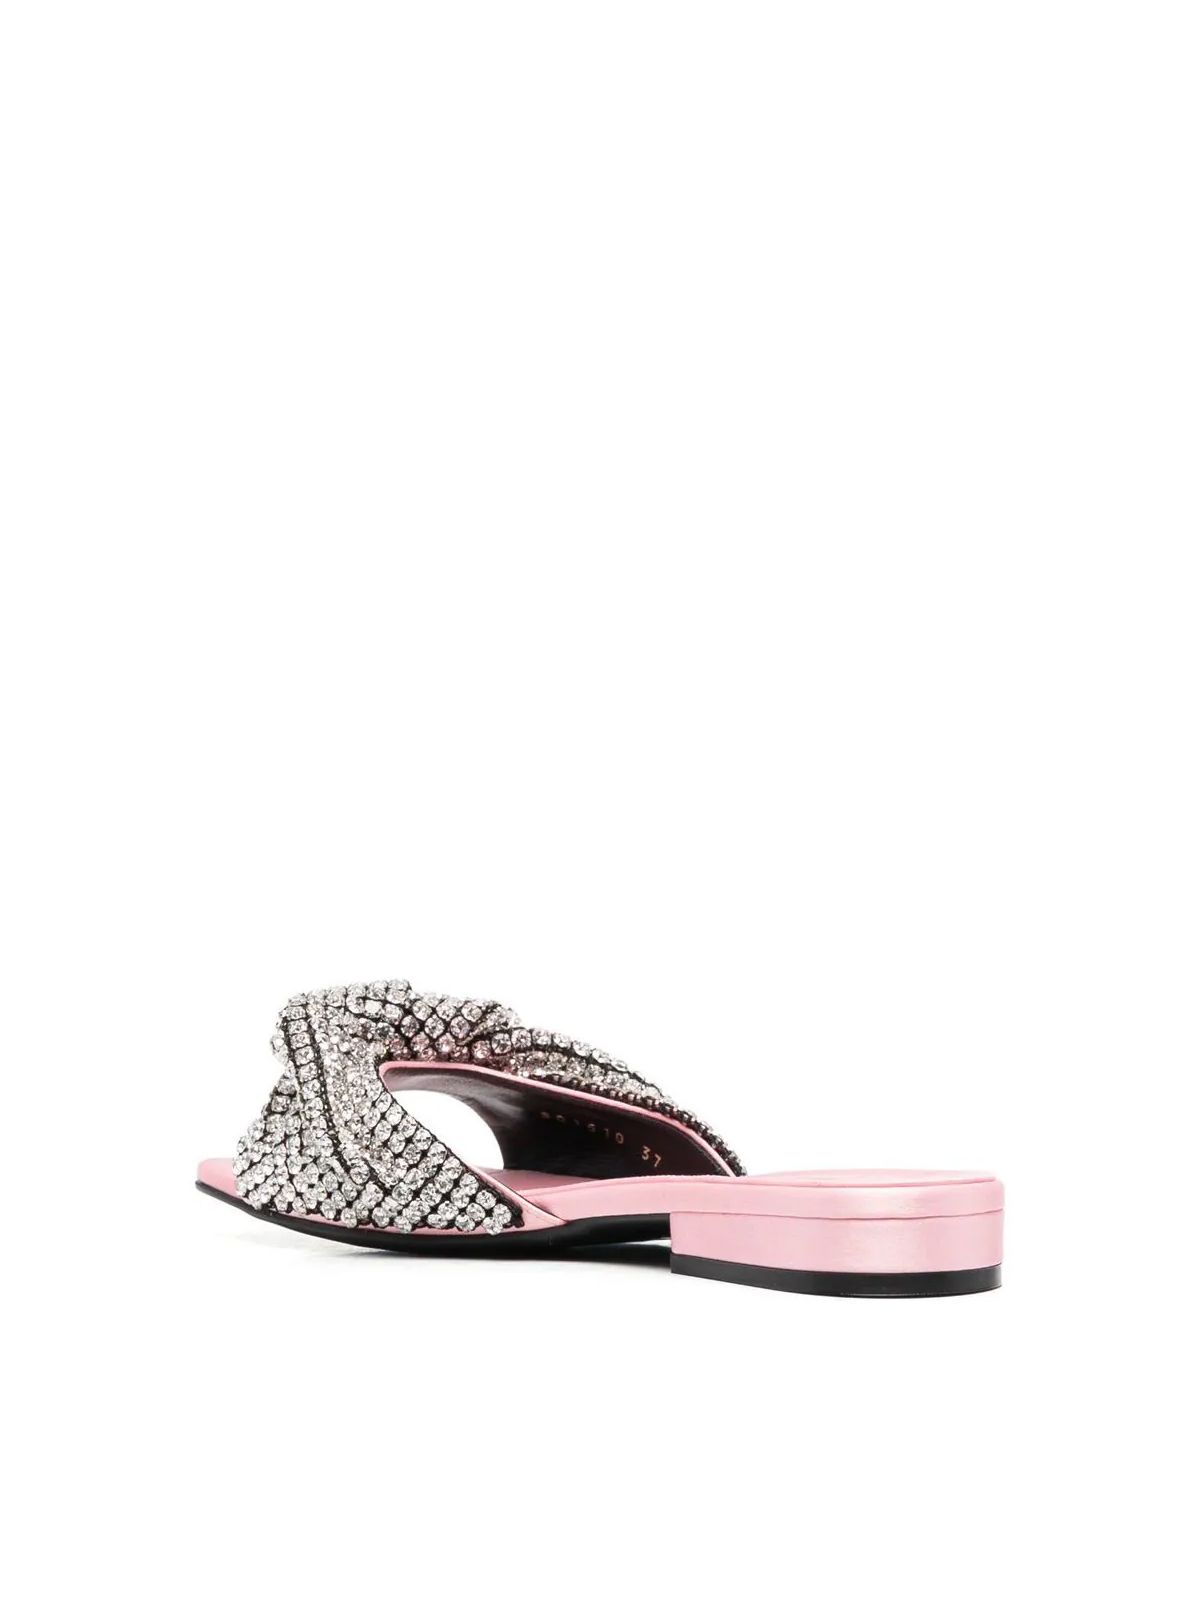 Shop Sergio Rossi Women's Flat Sandals 15